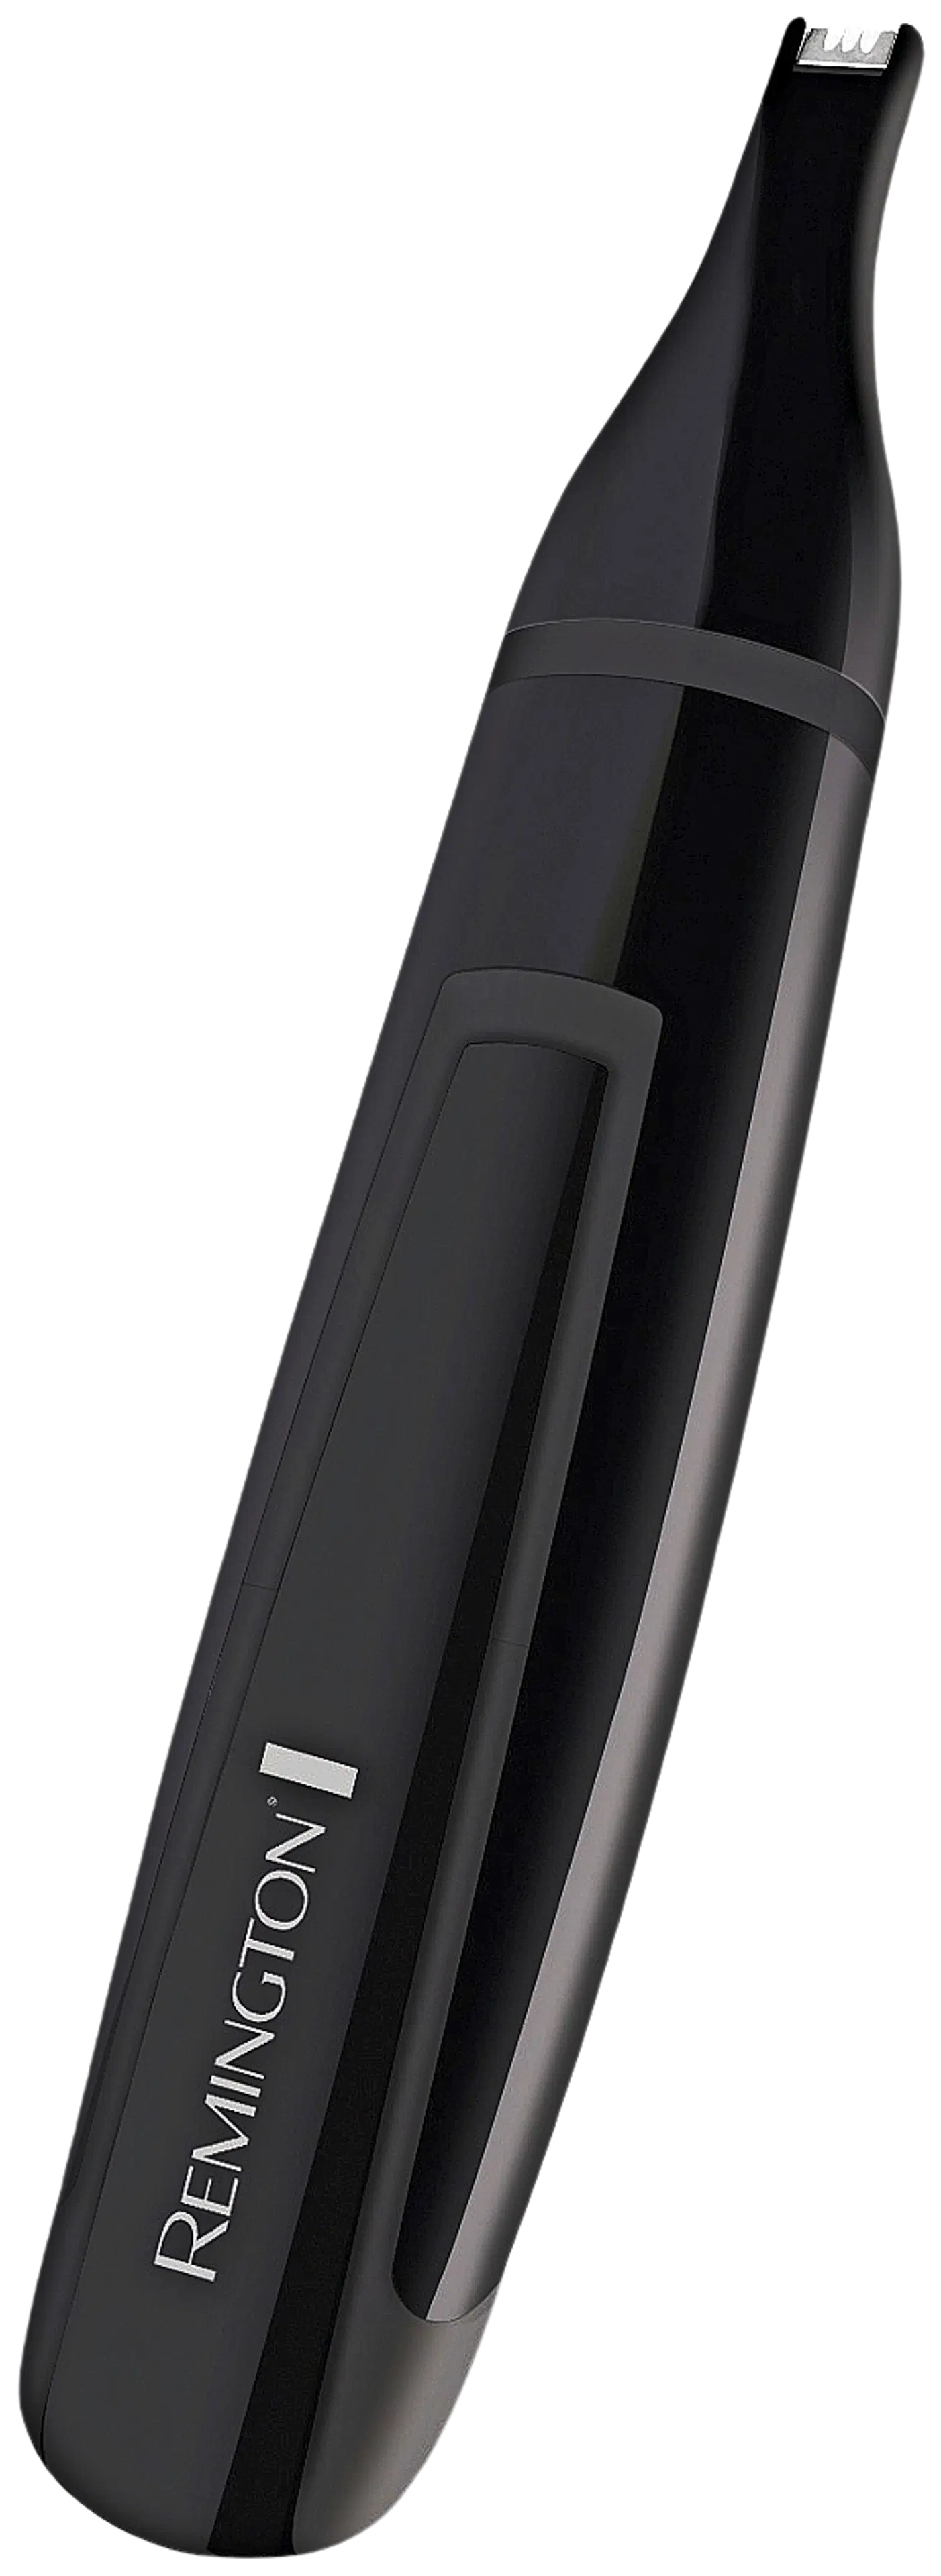 Remington hygieniatrimmeri Smart NE3150